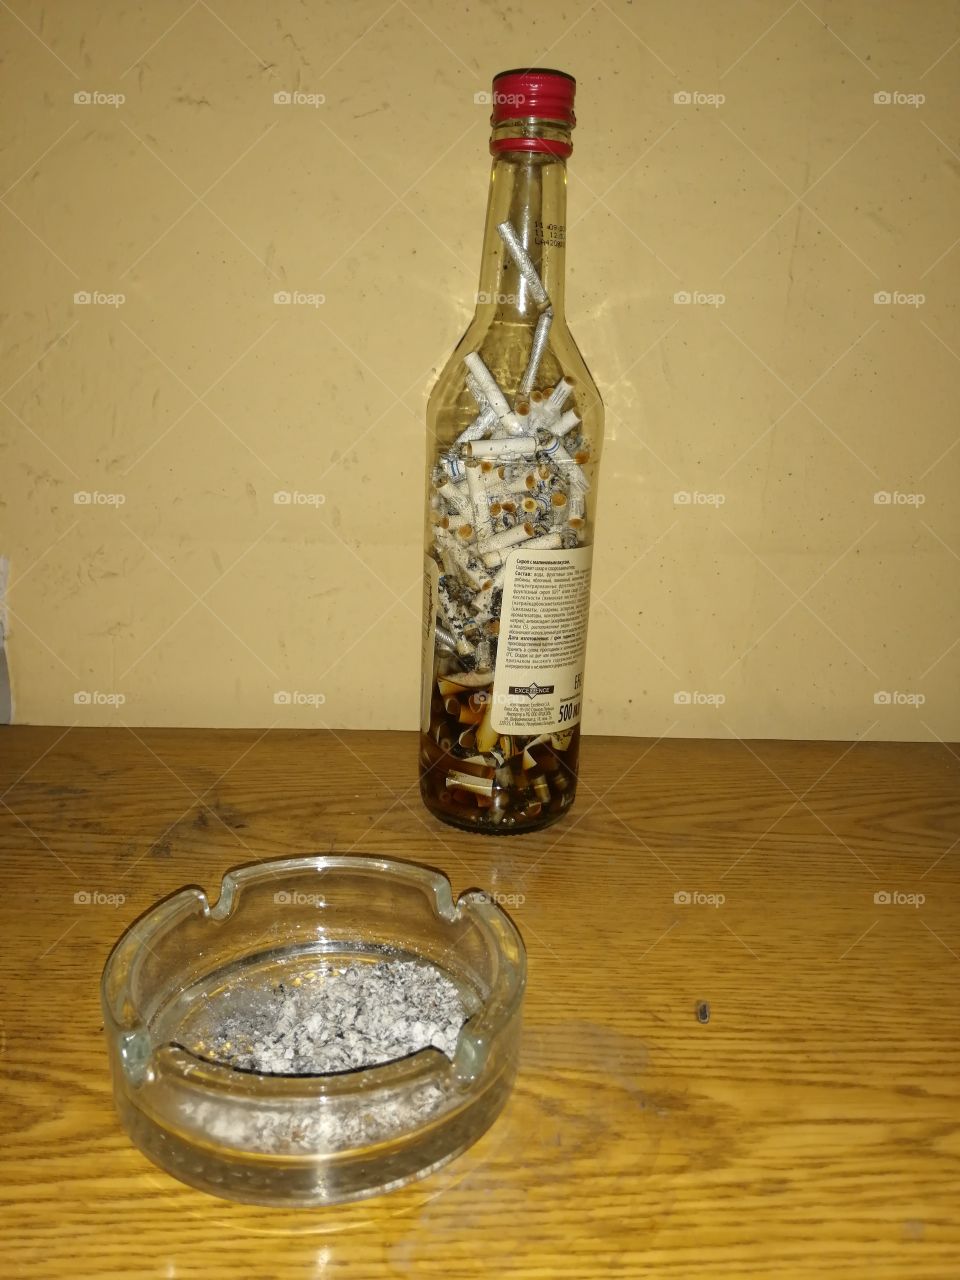 Ashtray in a bottle